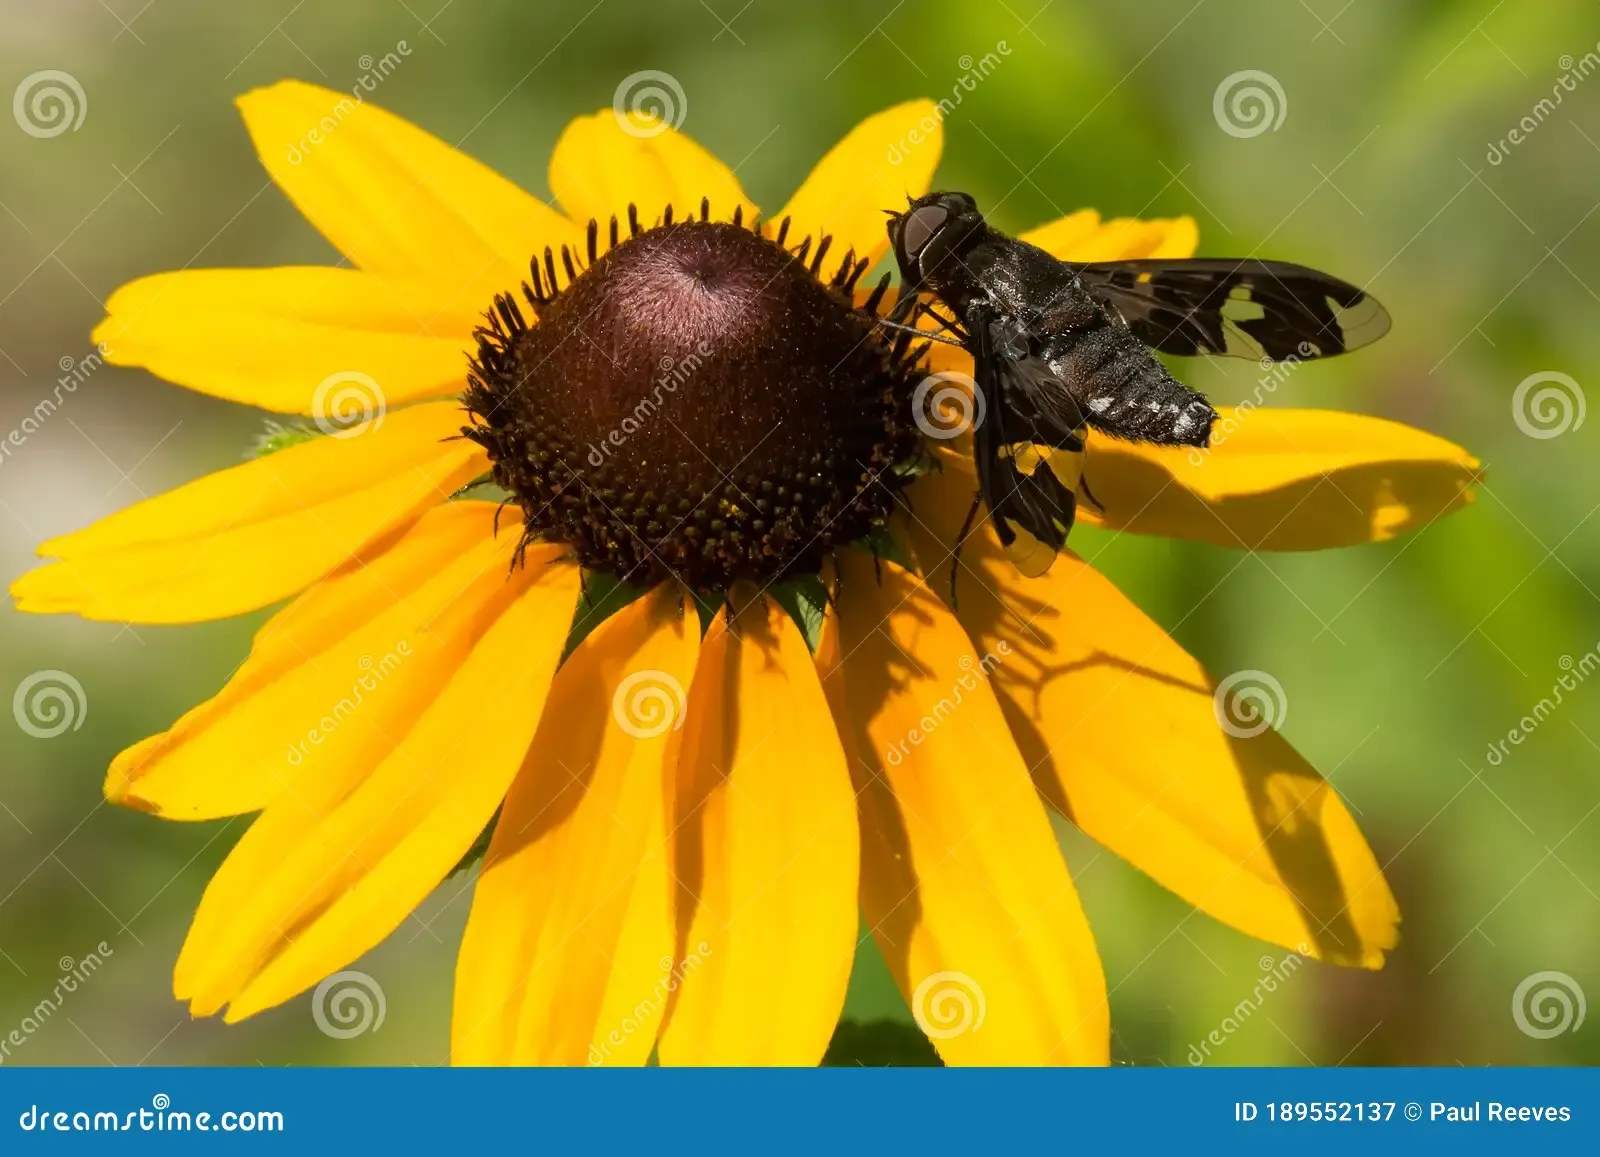 bee-fly-exoprosopa-decora-collecting-nectar-black-eyed-susan-flower-taylor-creek-park-toronto-ontario-canada-189552137.jpg